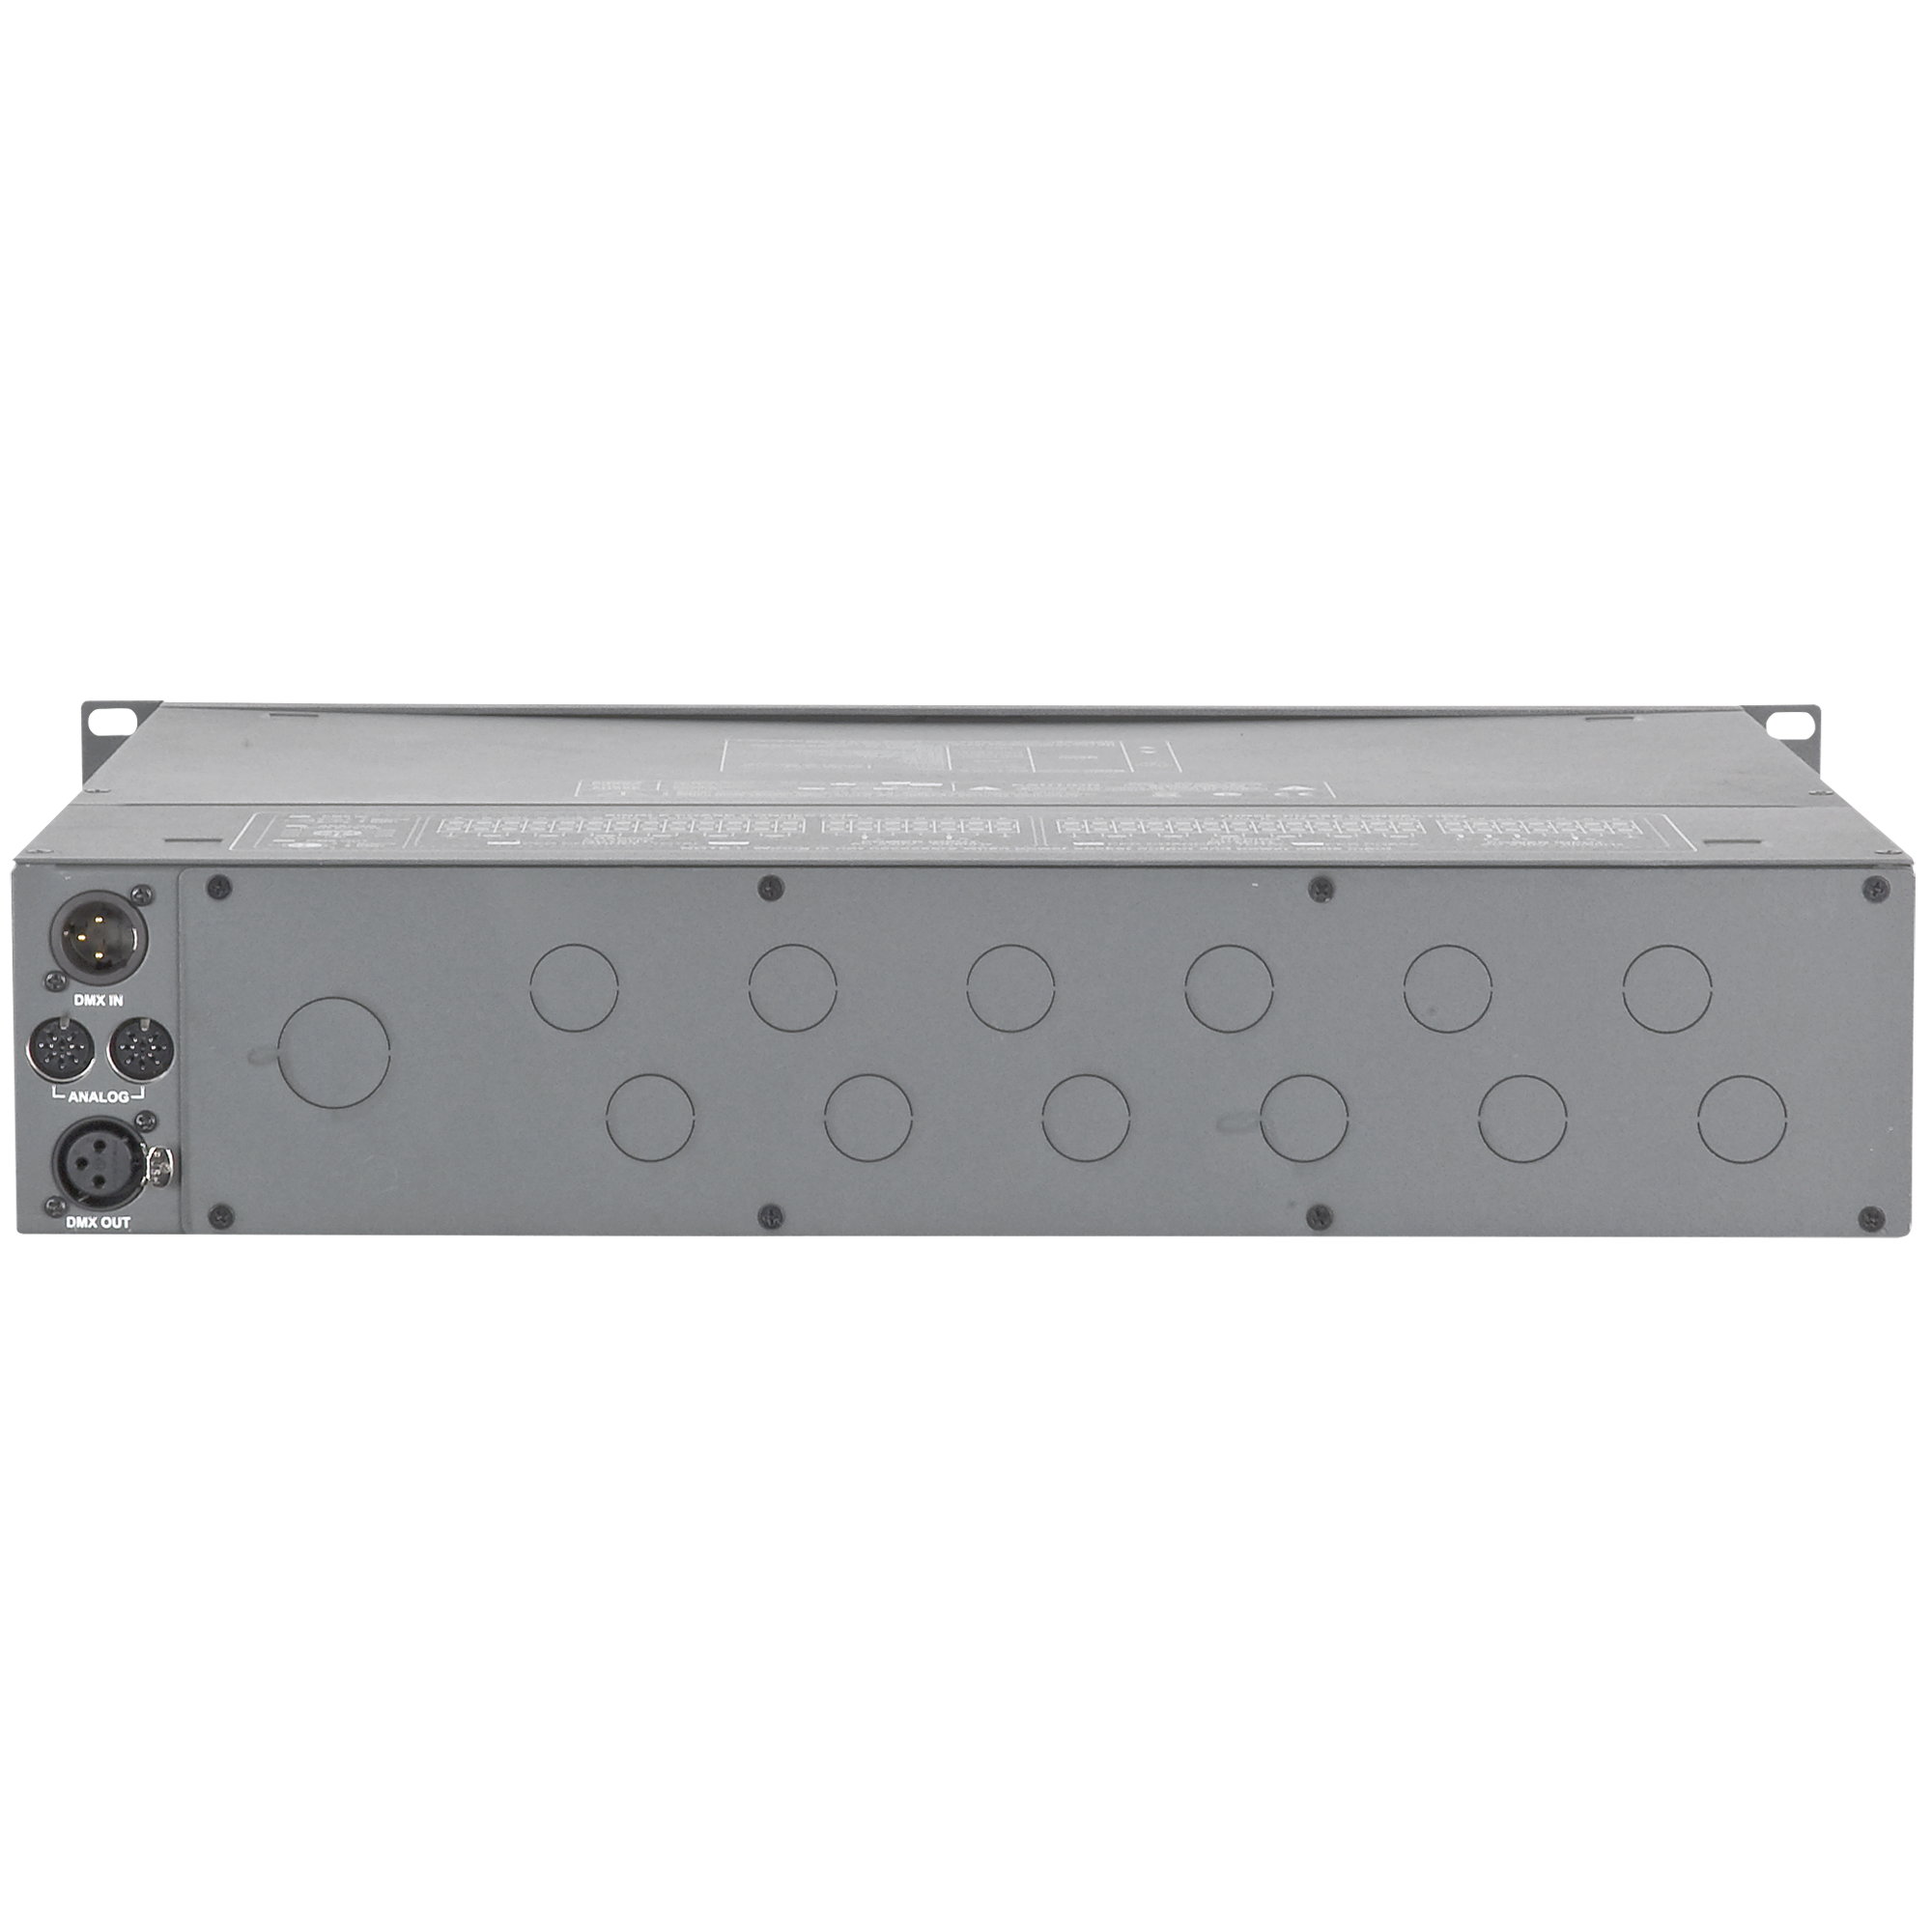 Showtec DDP-610 MKII Digitales Dimmerpack mit 6 Kanälen, 10-A-Sicherung, Klemmverbinder